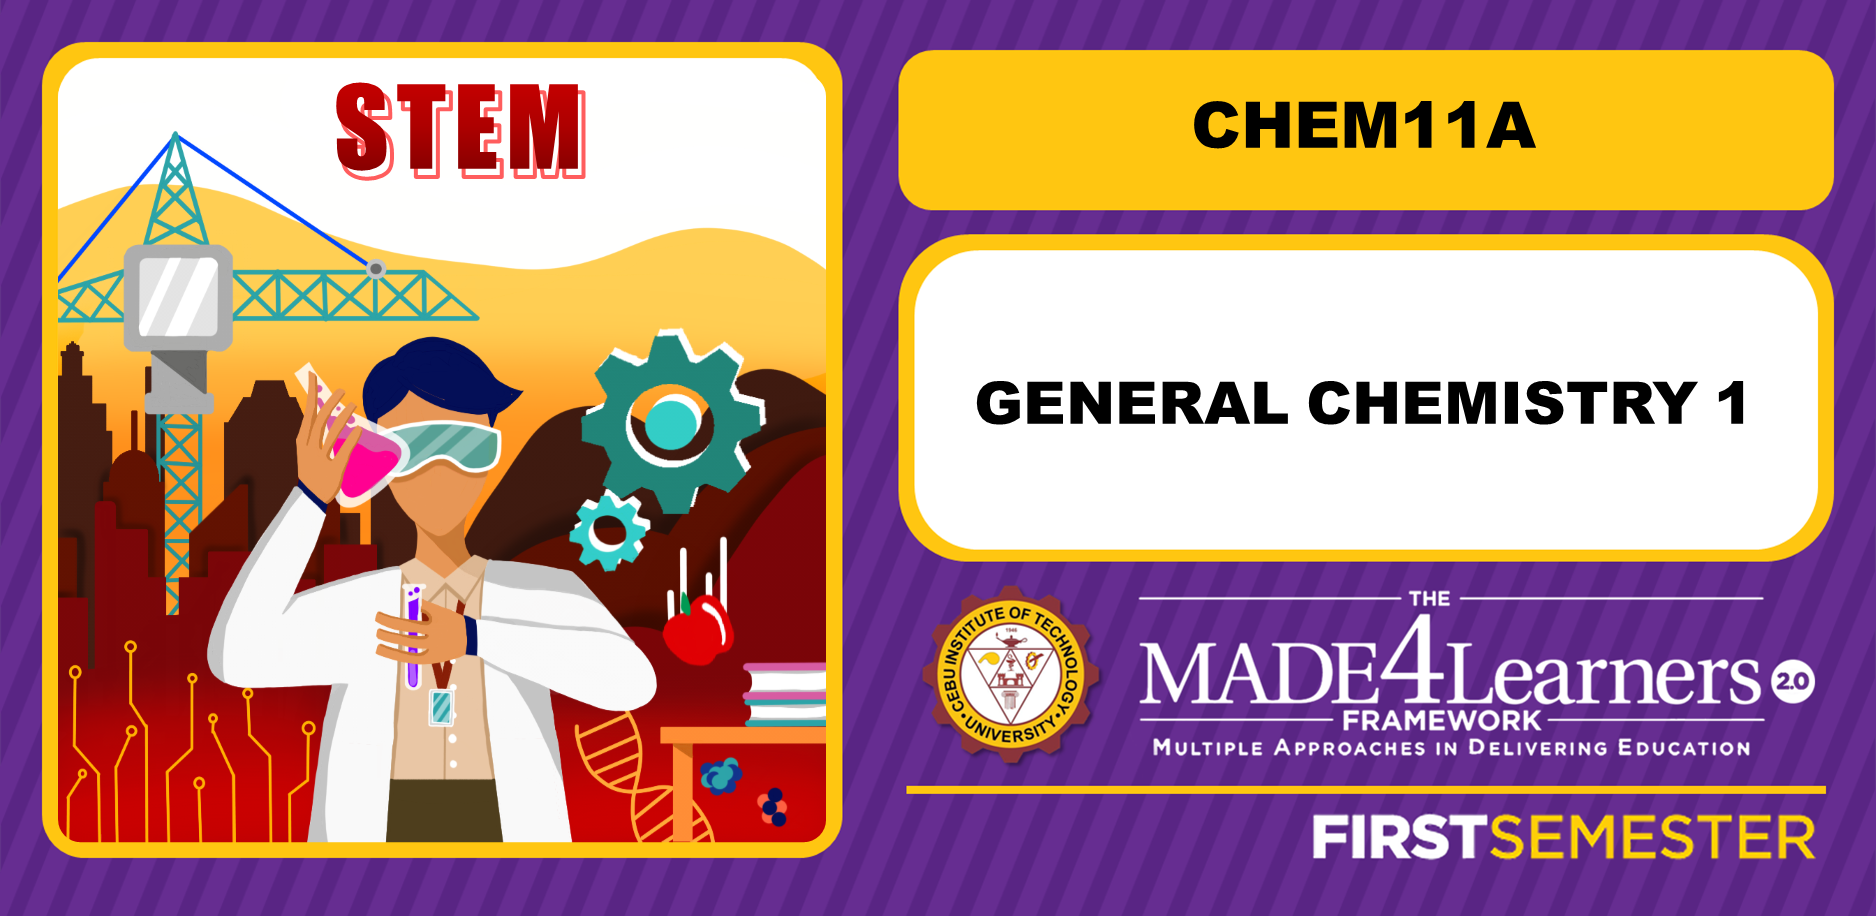 CHEM11A: General Chemistry